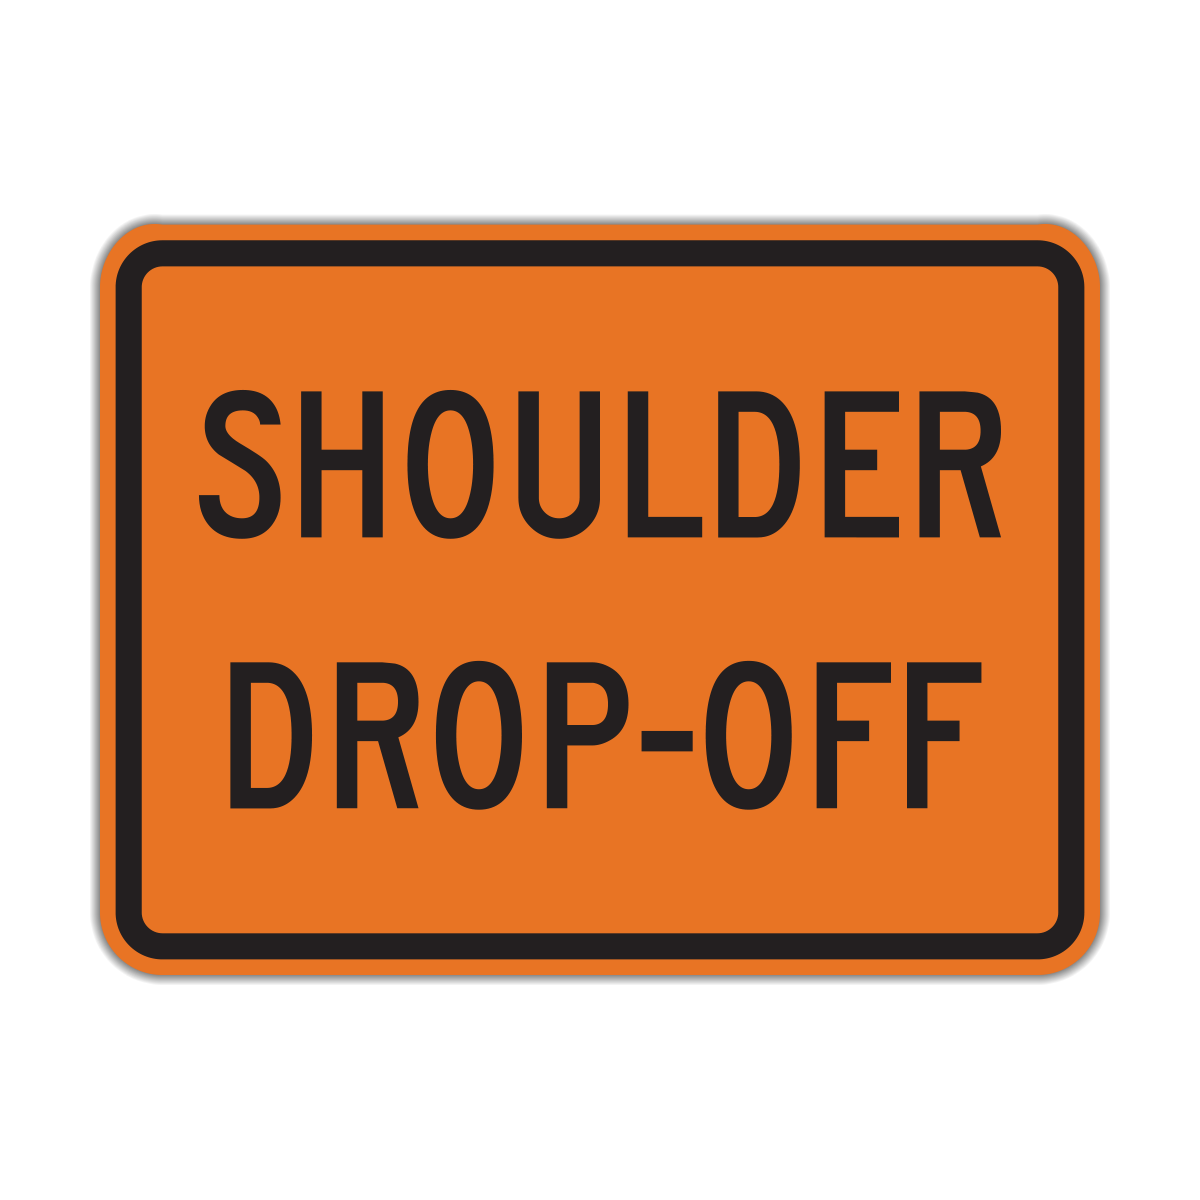 Shoulder Drop-Off Construction Road Work Warning Sign (W8-17p)